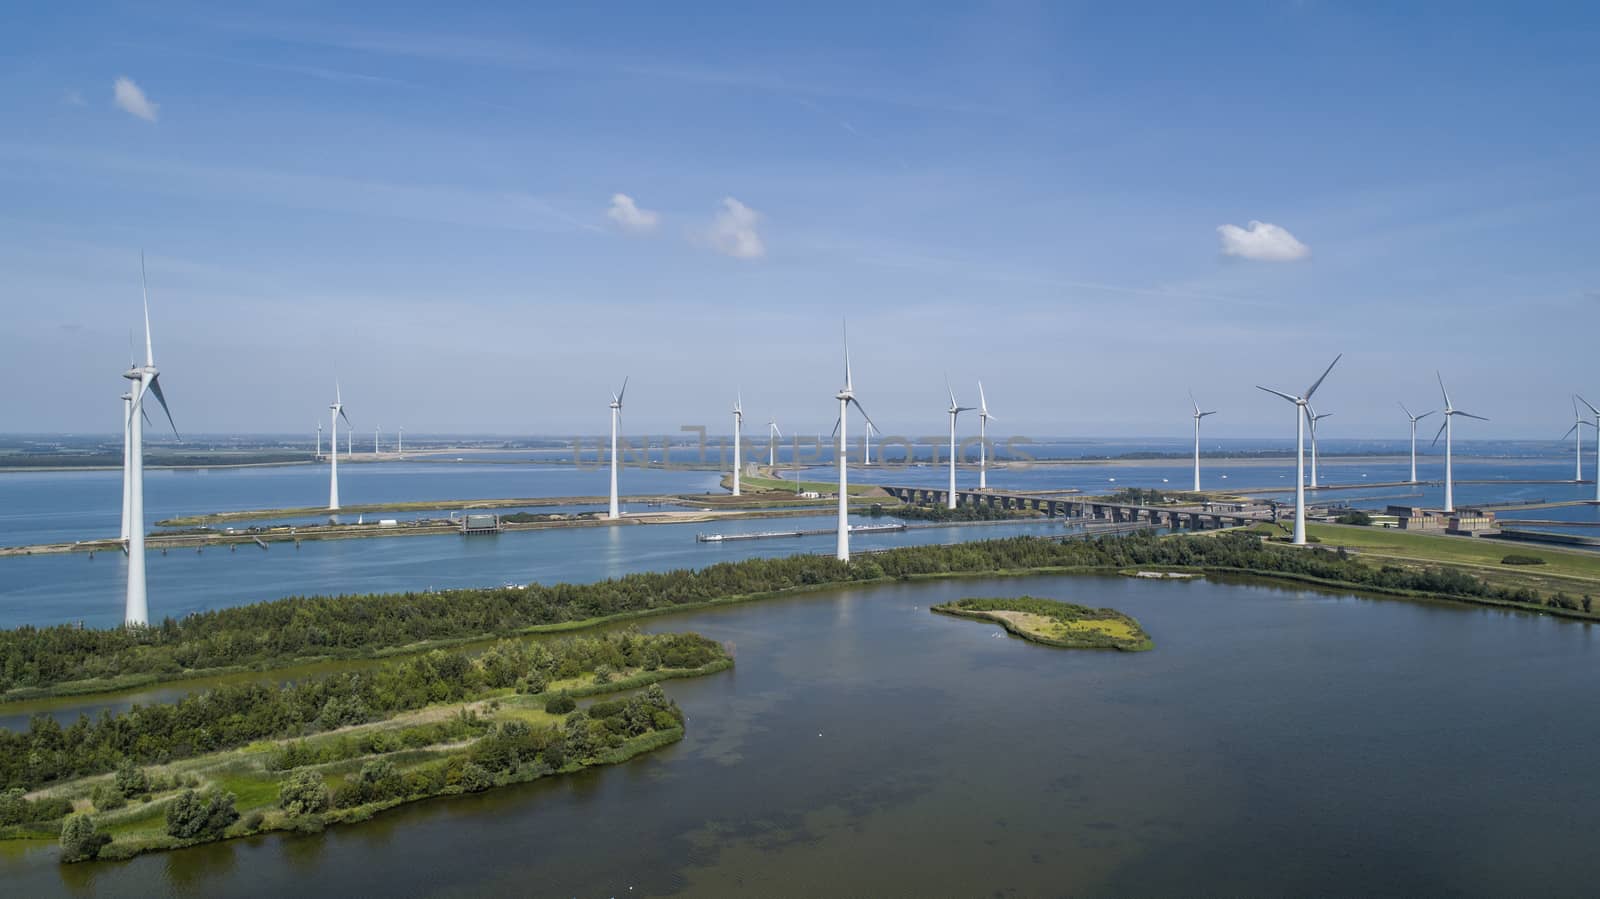 Wind turbine from aerial view, Drone view at windpark krammersluizen by Tjeerdkruse